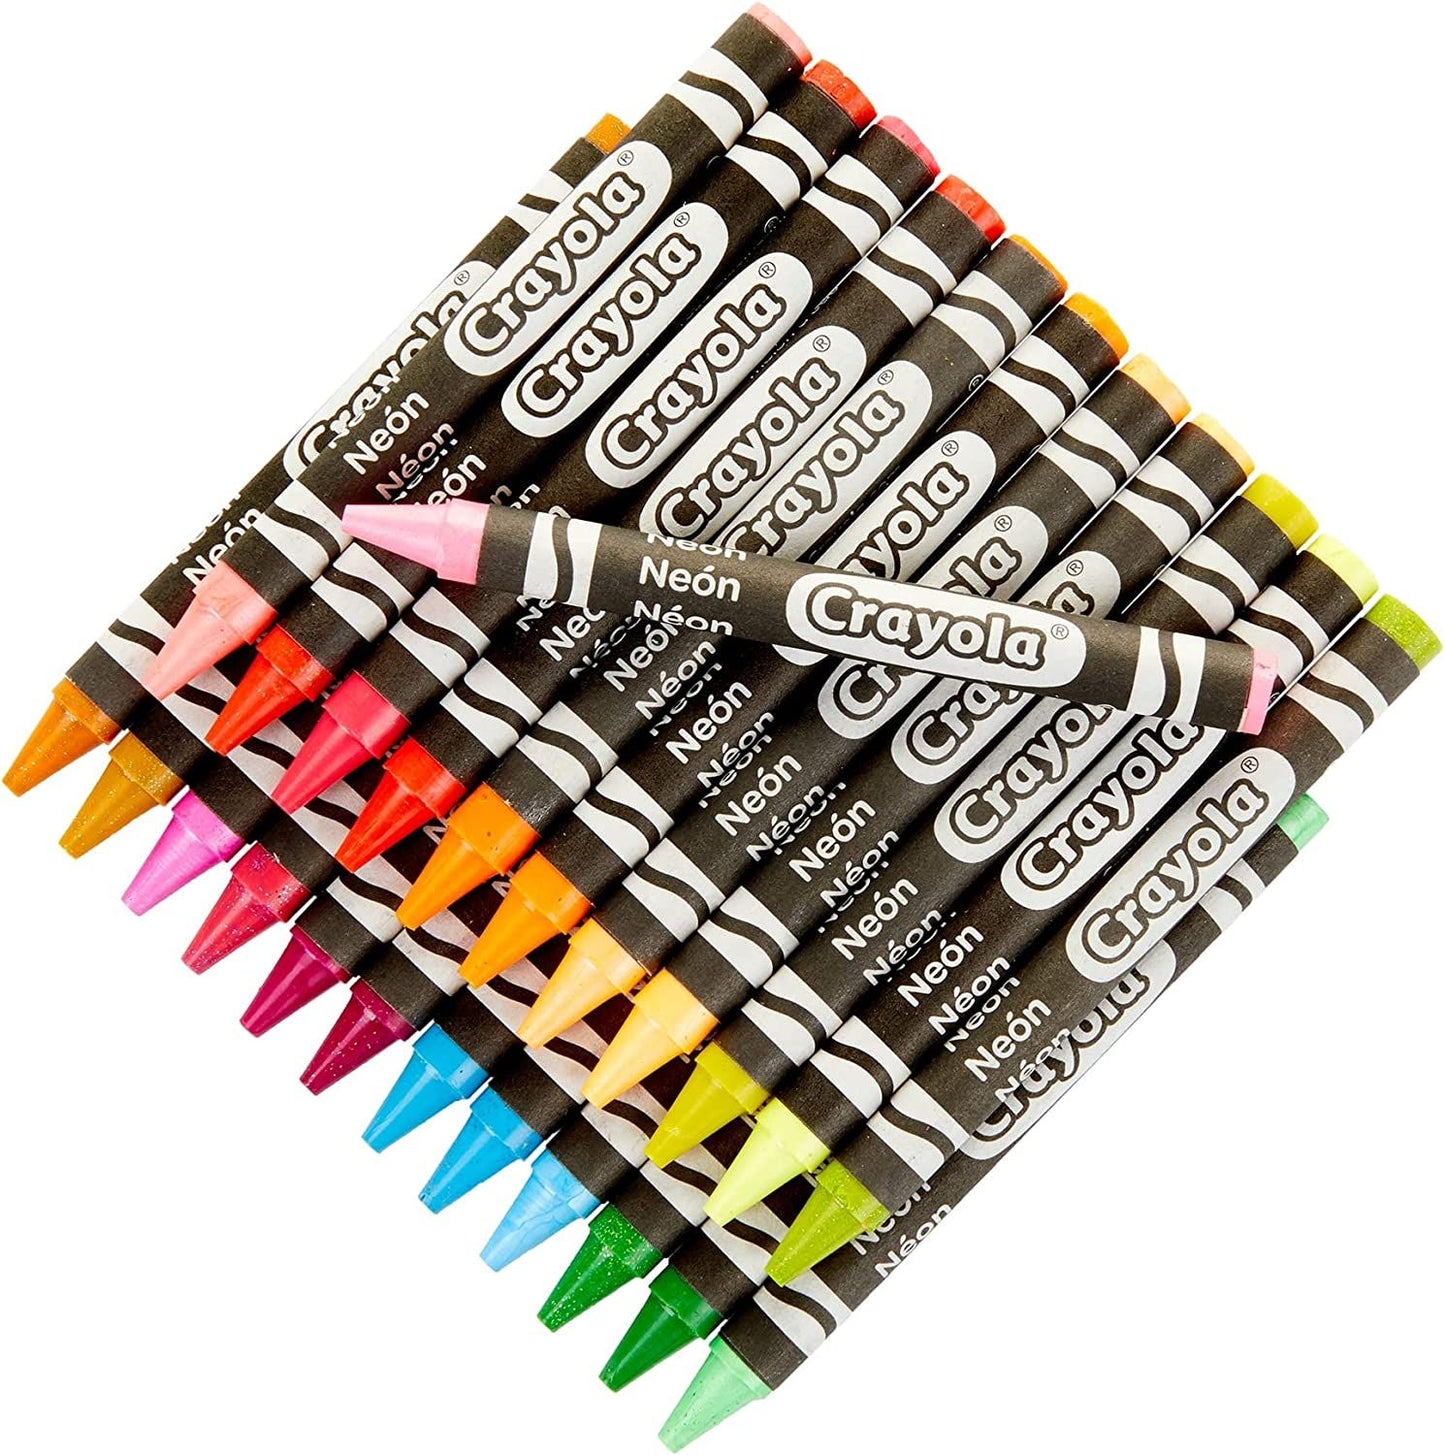 Crayola Neon 24 Color Crayon || الوان شمعية كرايولا نيون ٢٤ لون